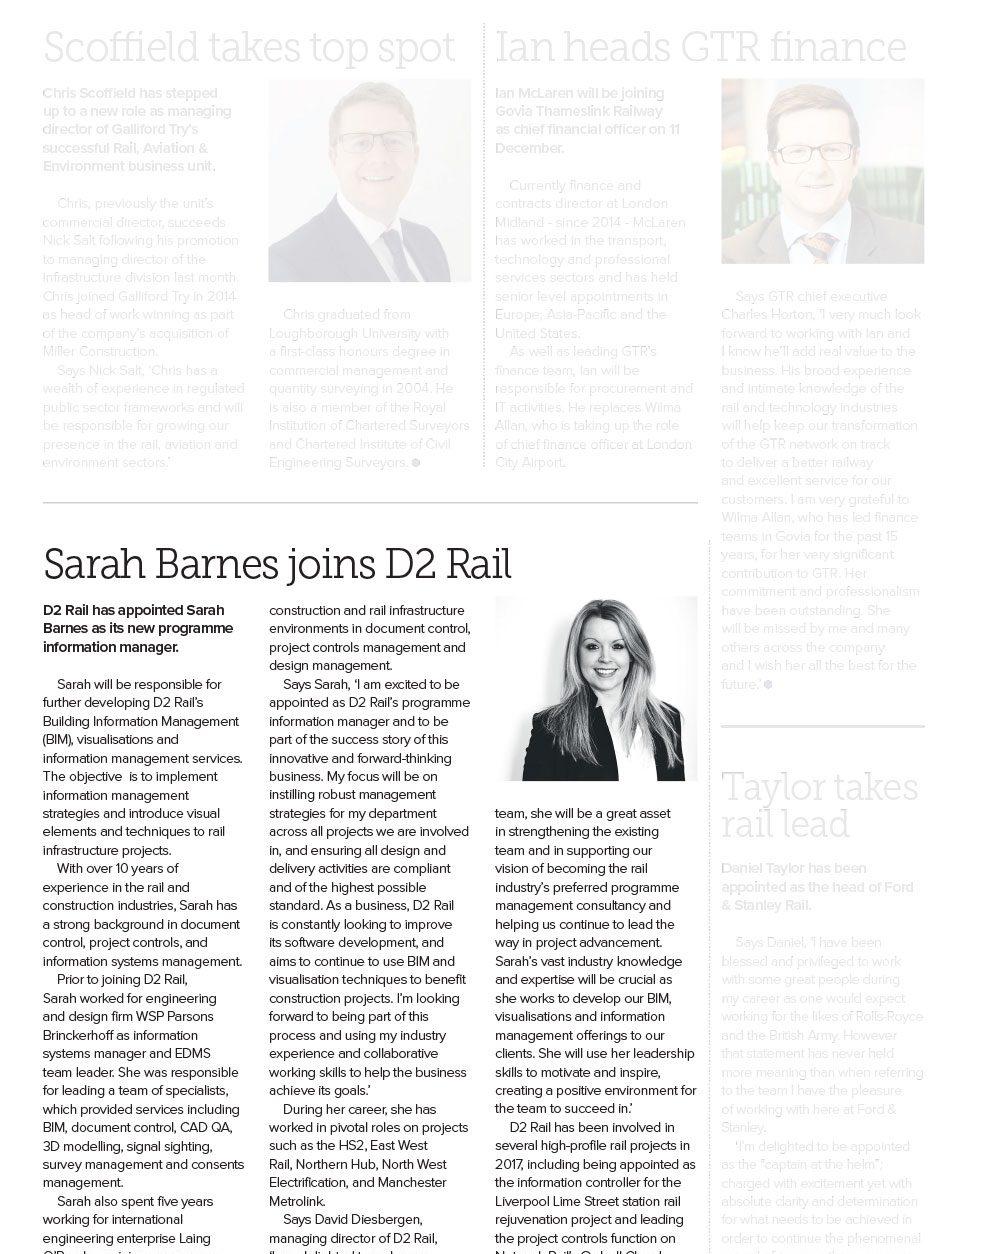 Sarah Barnes joins D2 Rail in Information Management